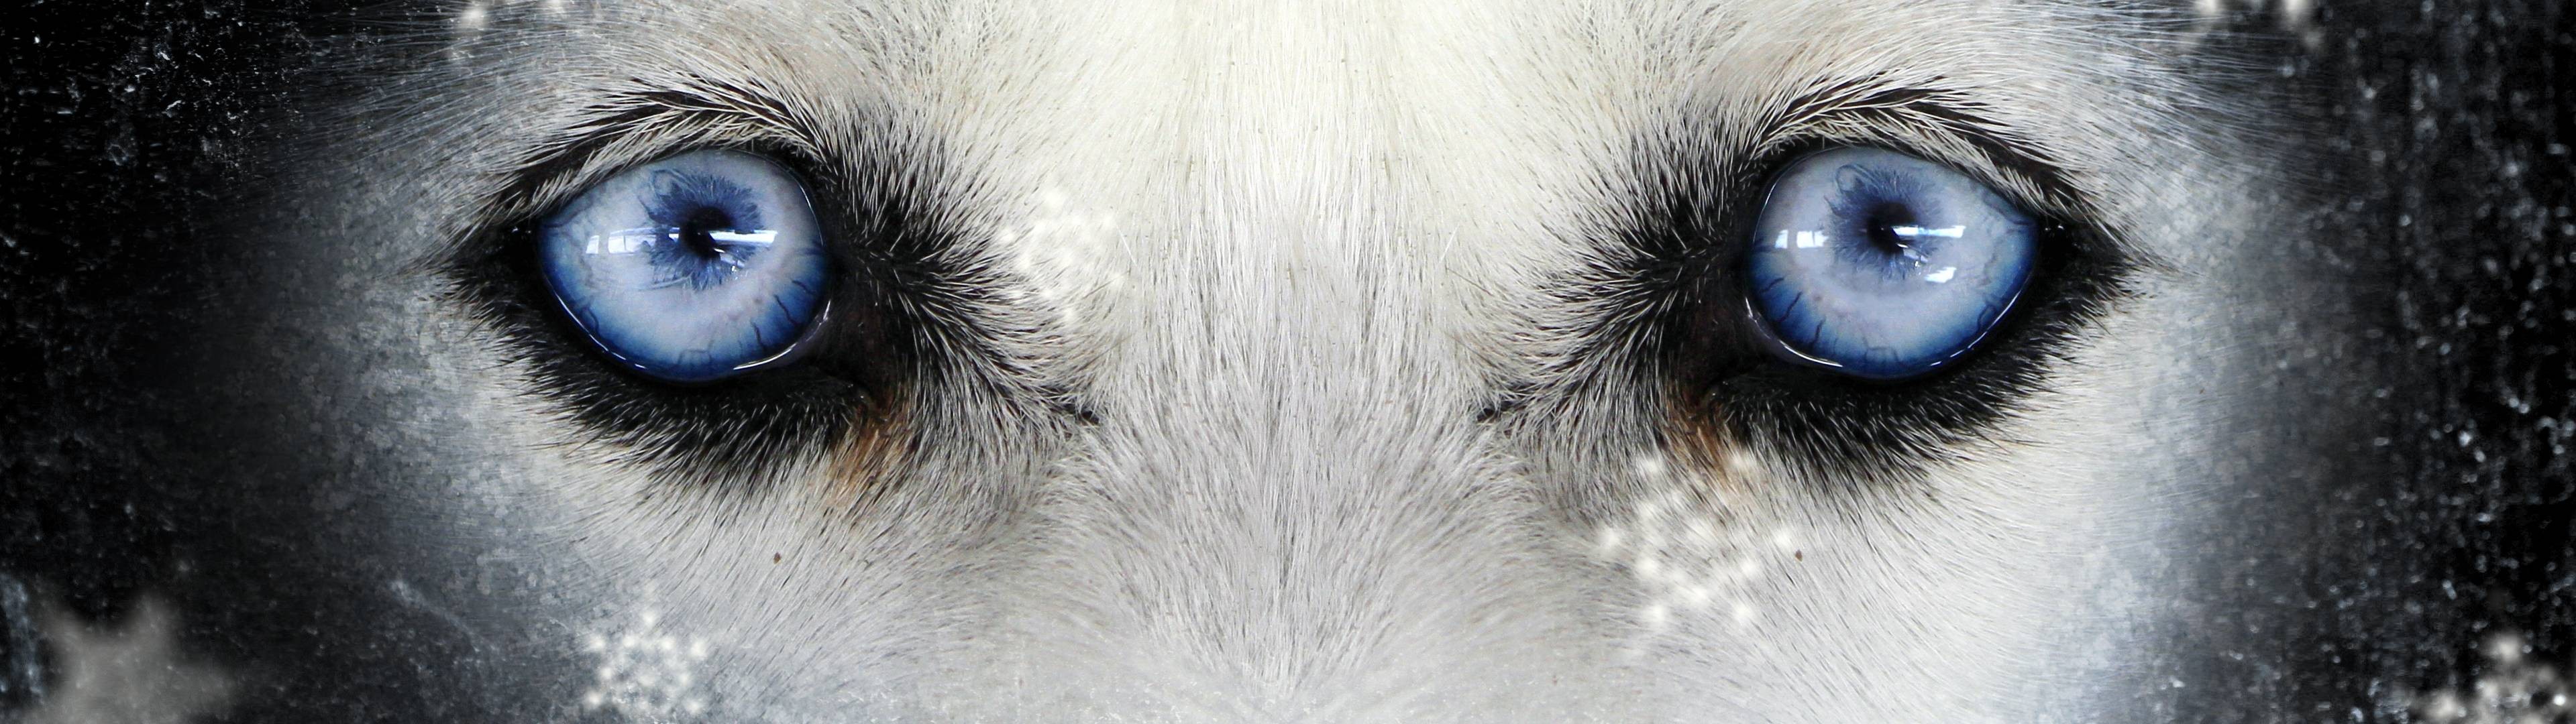 General 3840x1080 multiple display animals eyes animal eyes mammals closeup